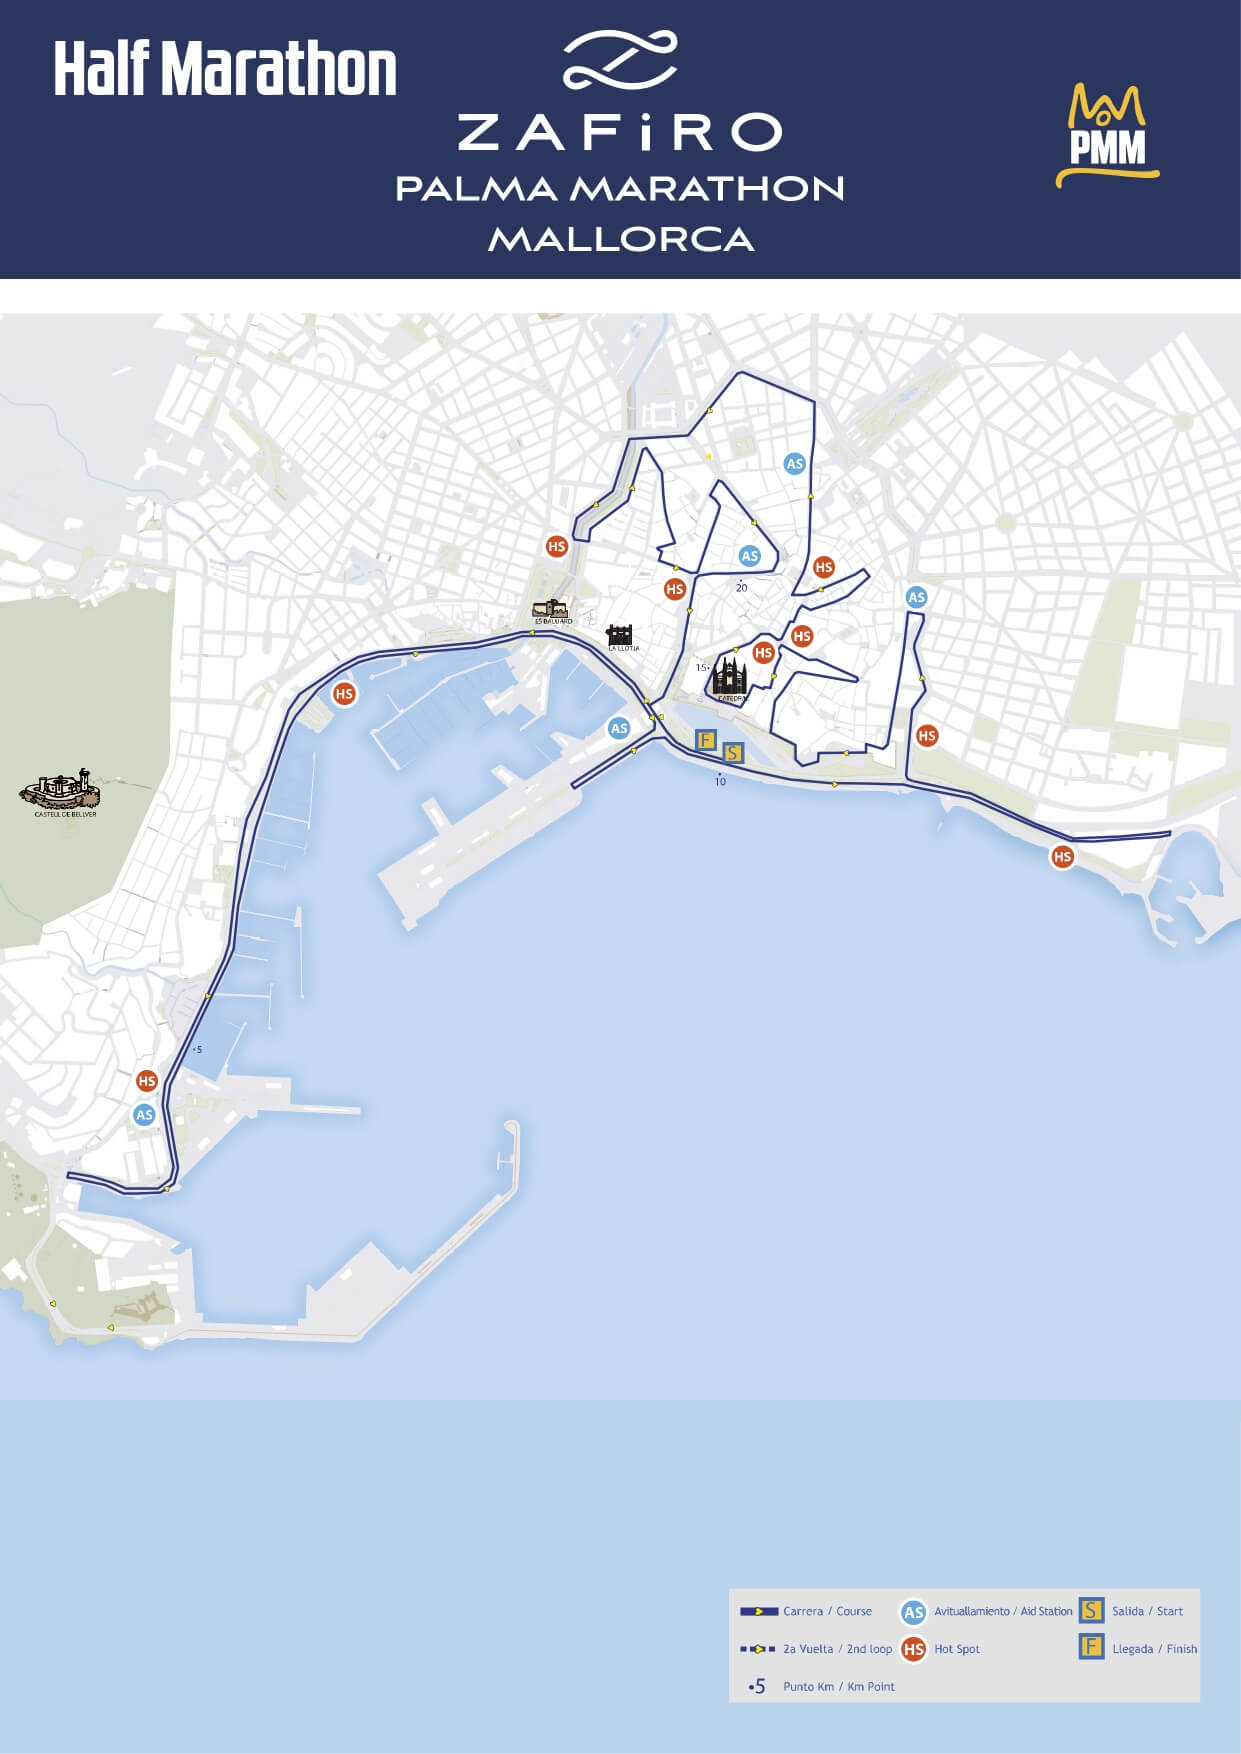 Zafiro Palma Marathon 2022 route and traffic Mallorca Global Mag